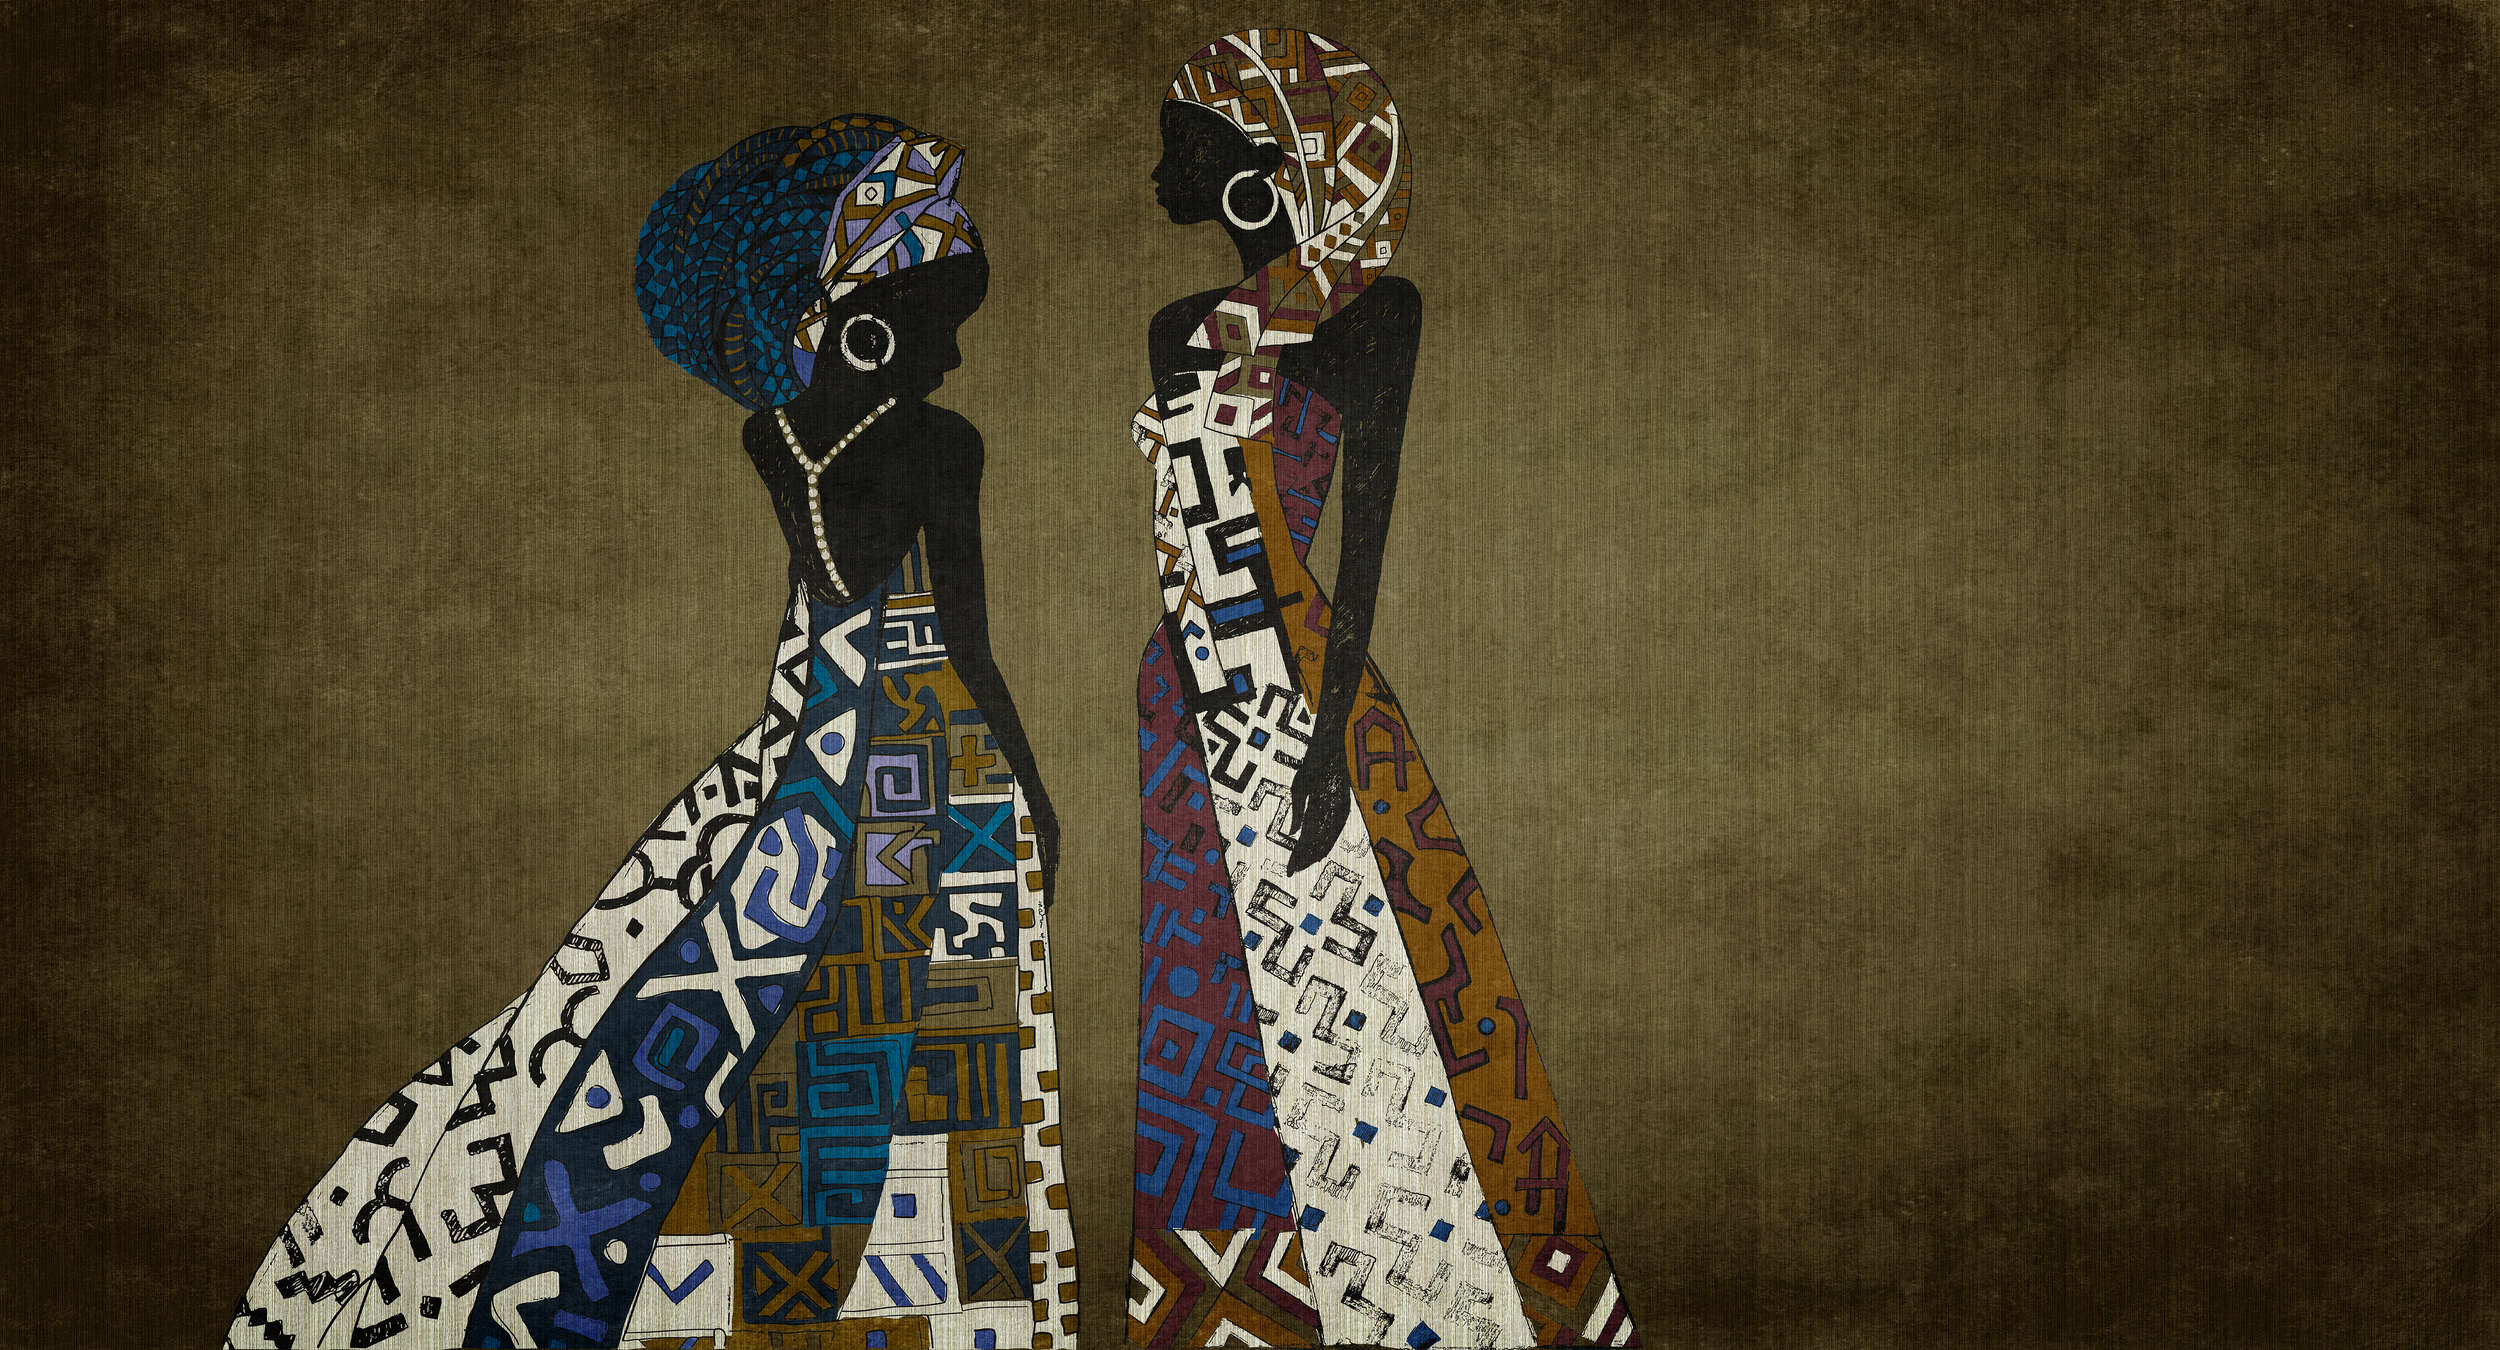             Nairobi 3 - Diseño de vestido de papel pintado de África con patrón étnico
        